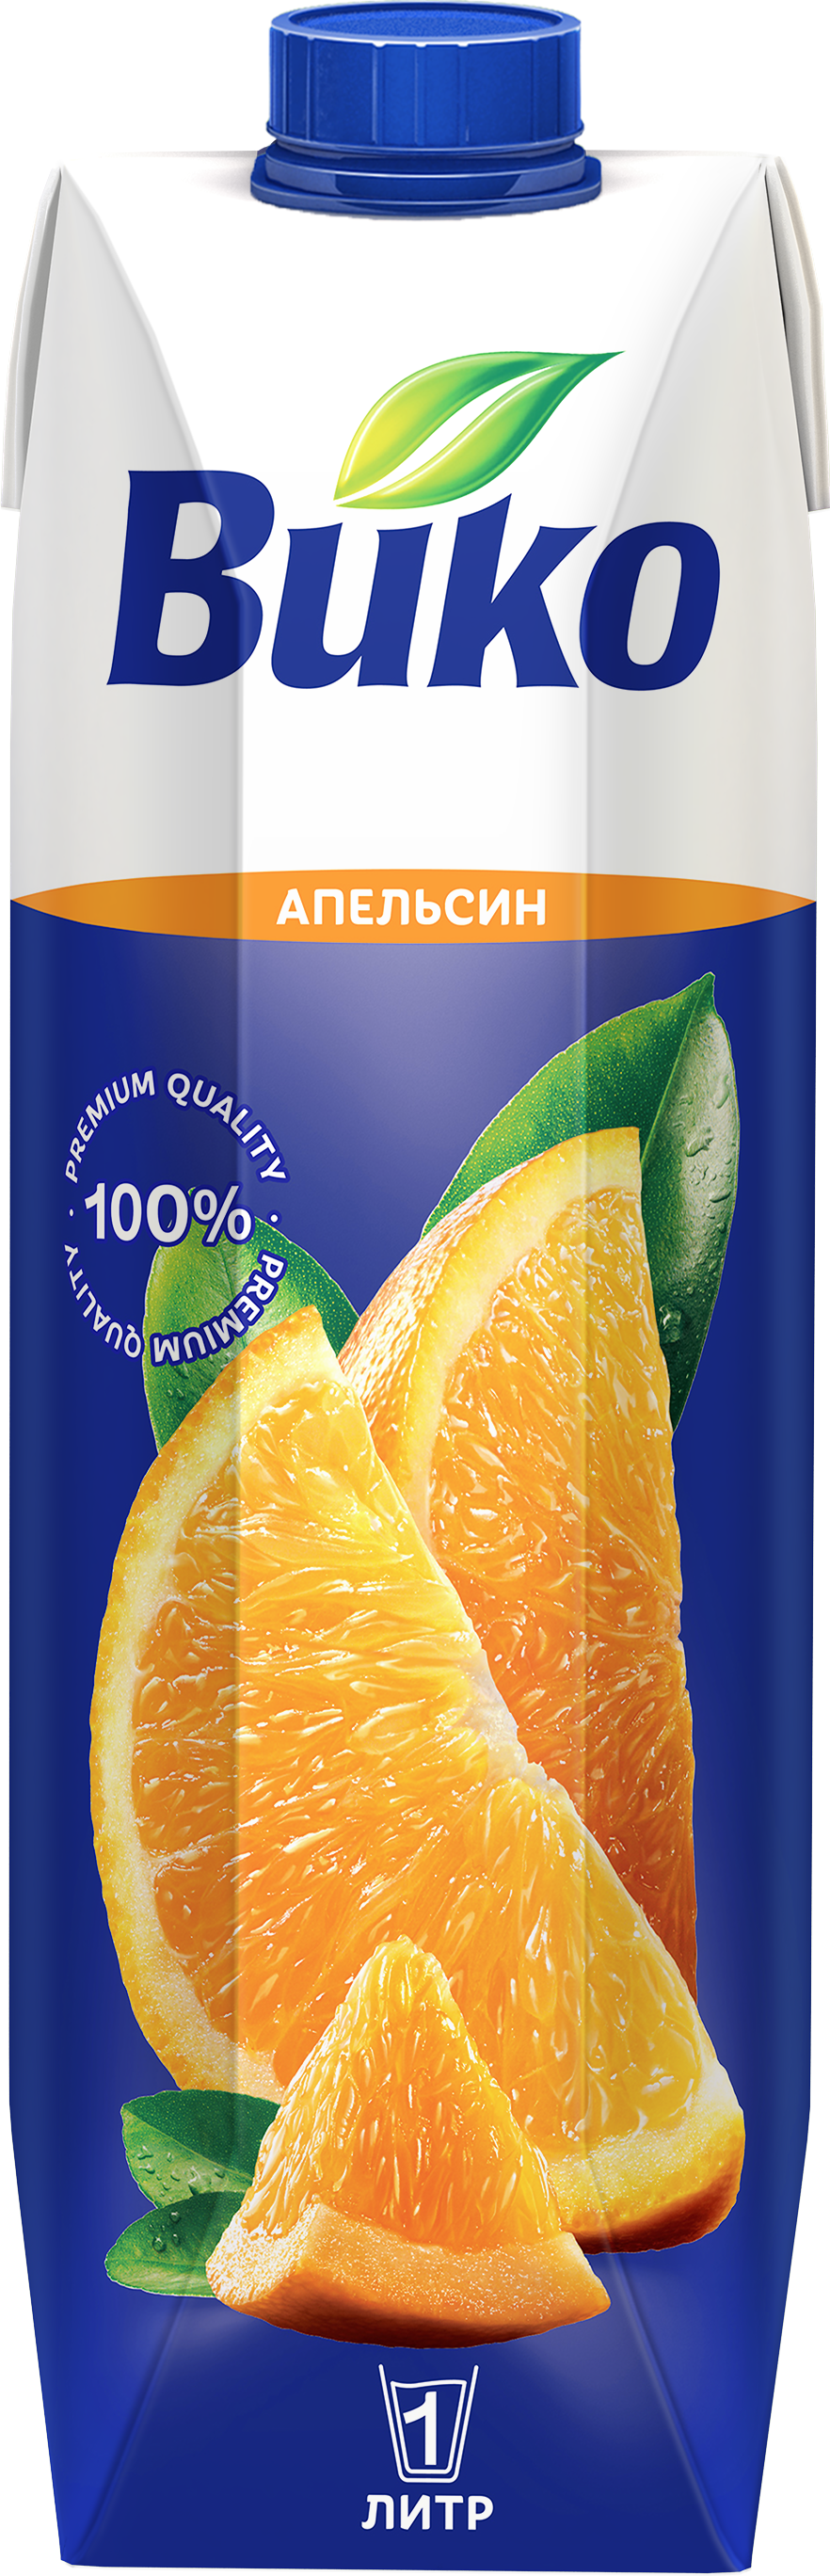 Сок ВИКО Апельсиновый без сахара 1 л х 6 шт. - фото 5